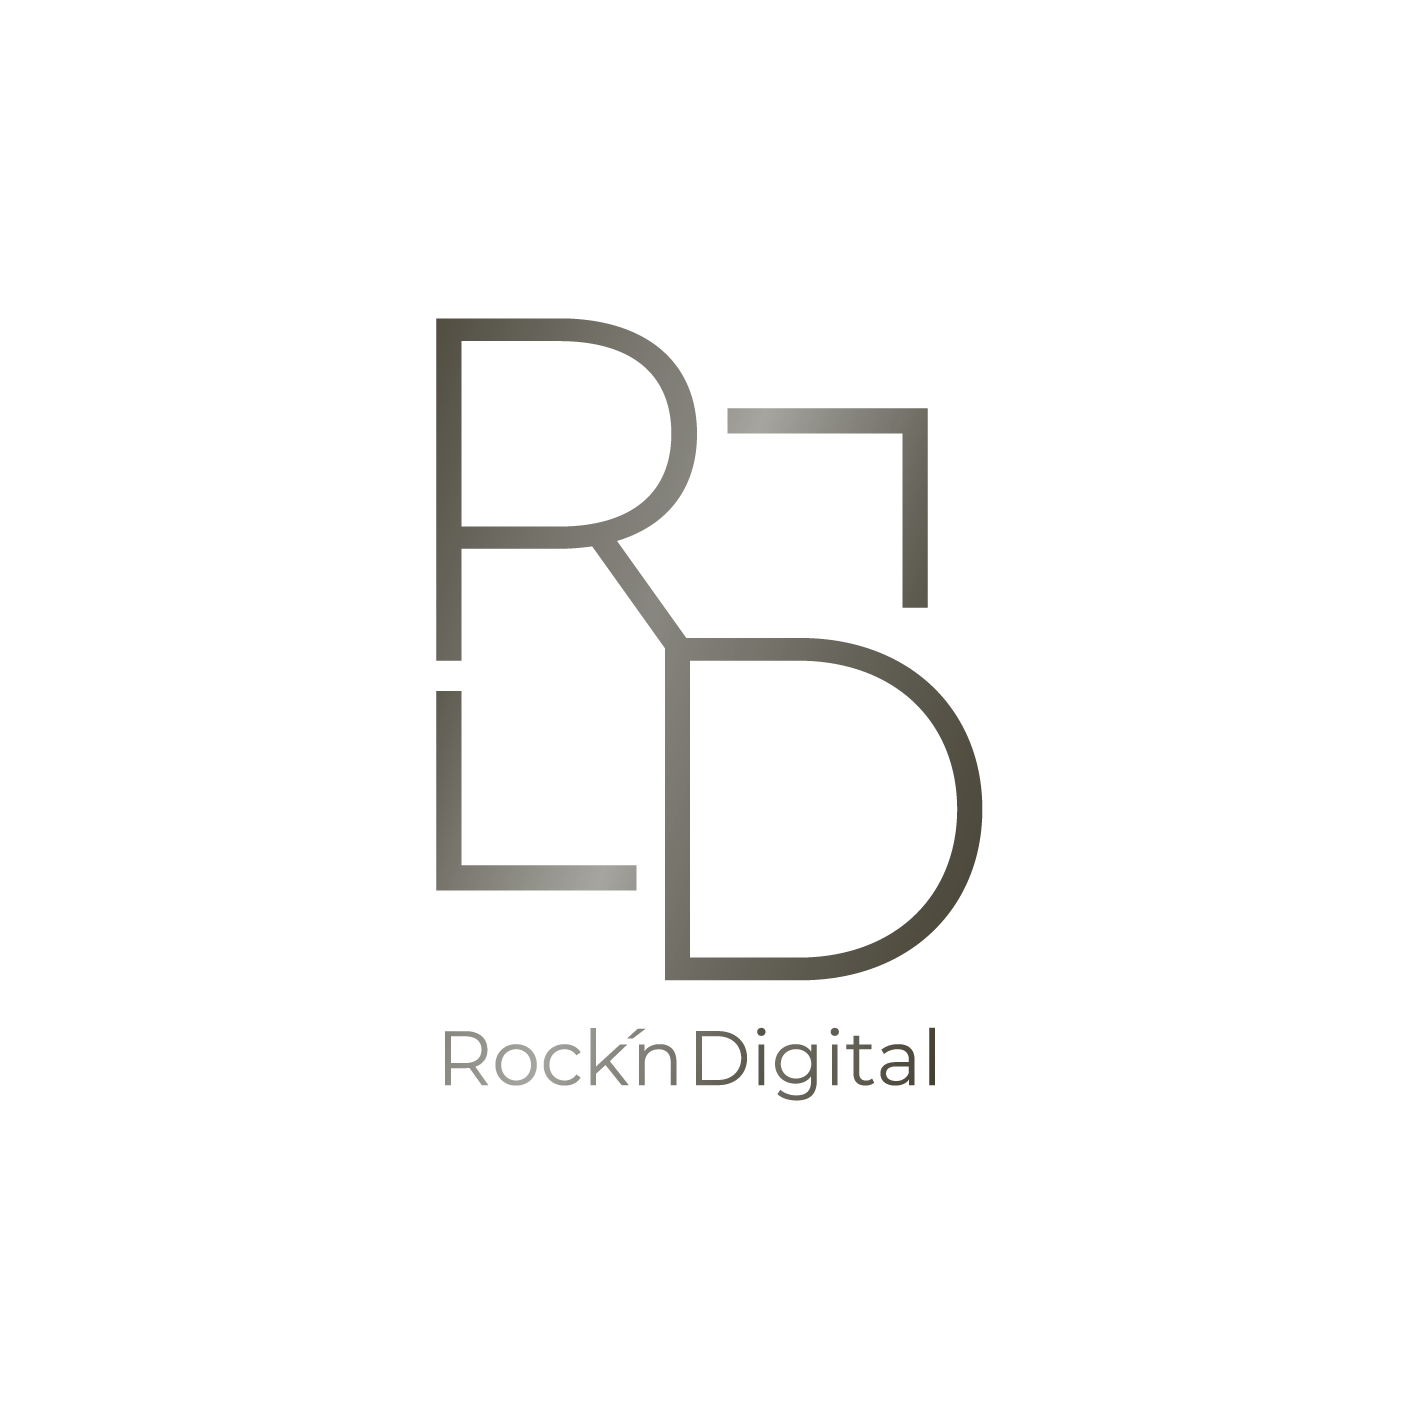 Rocking Digital